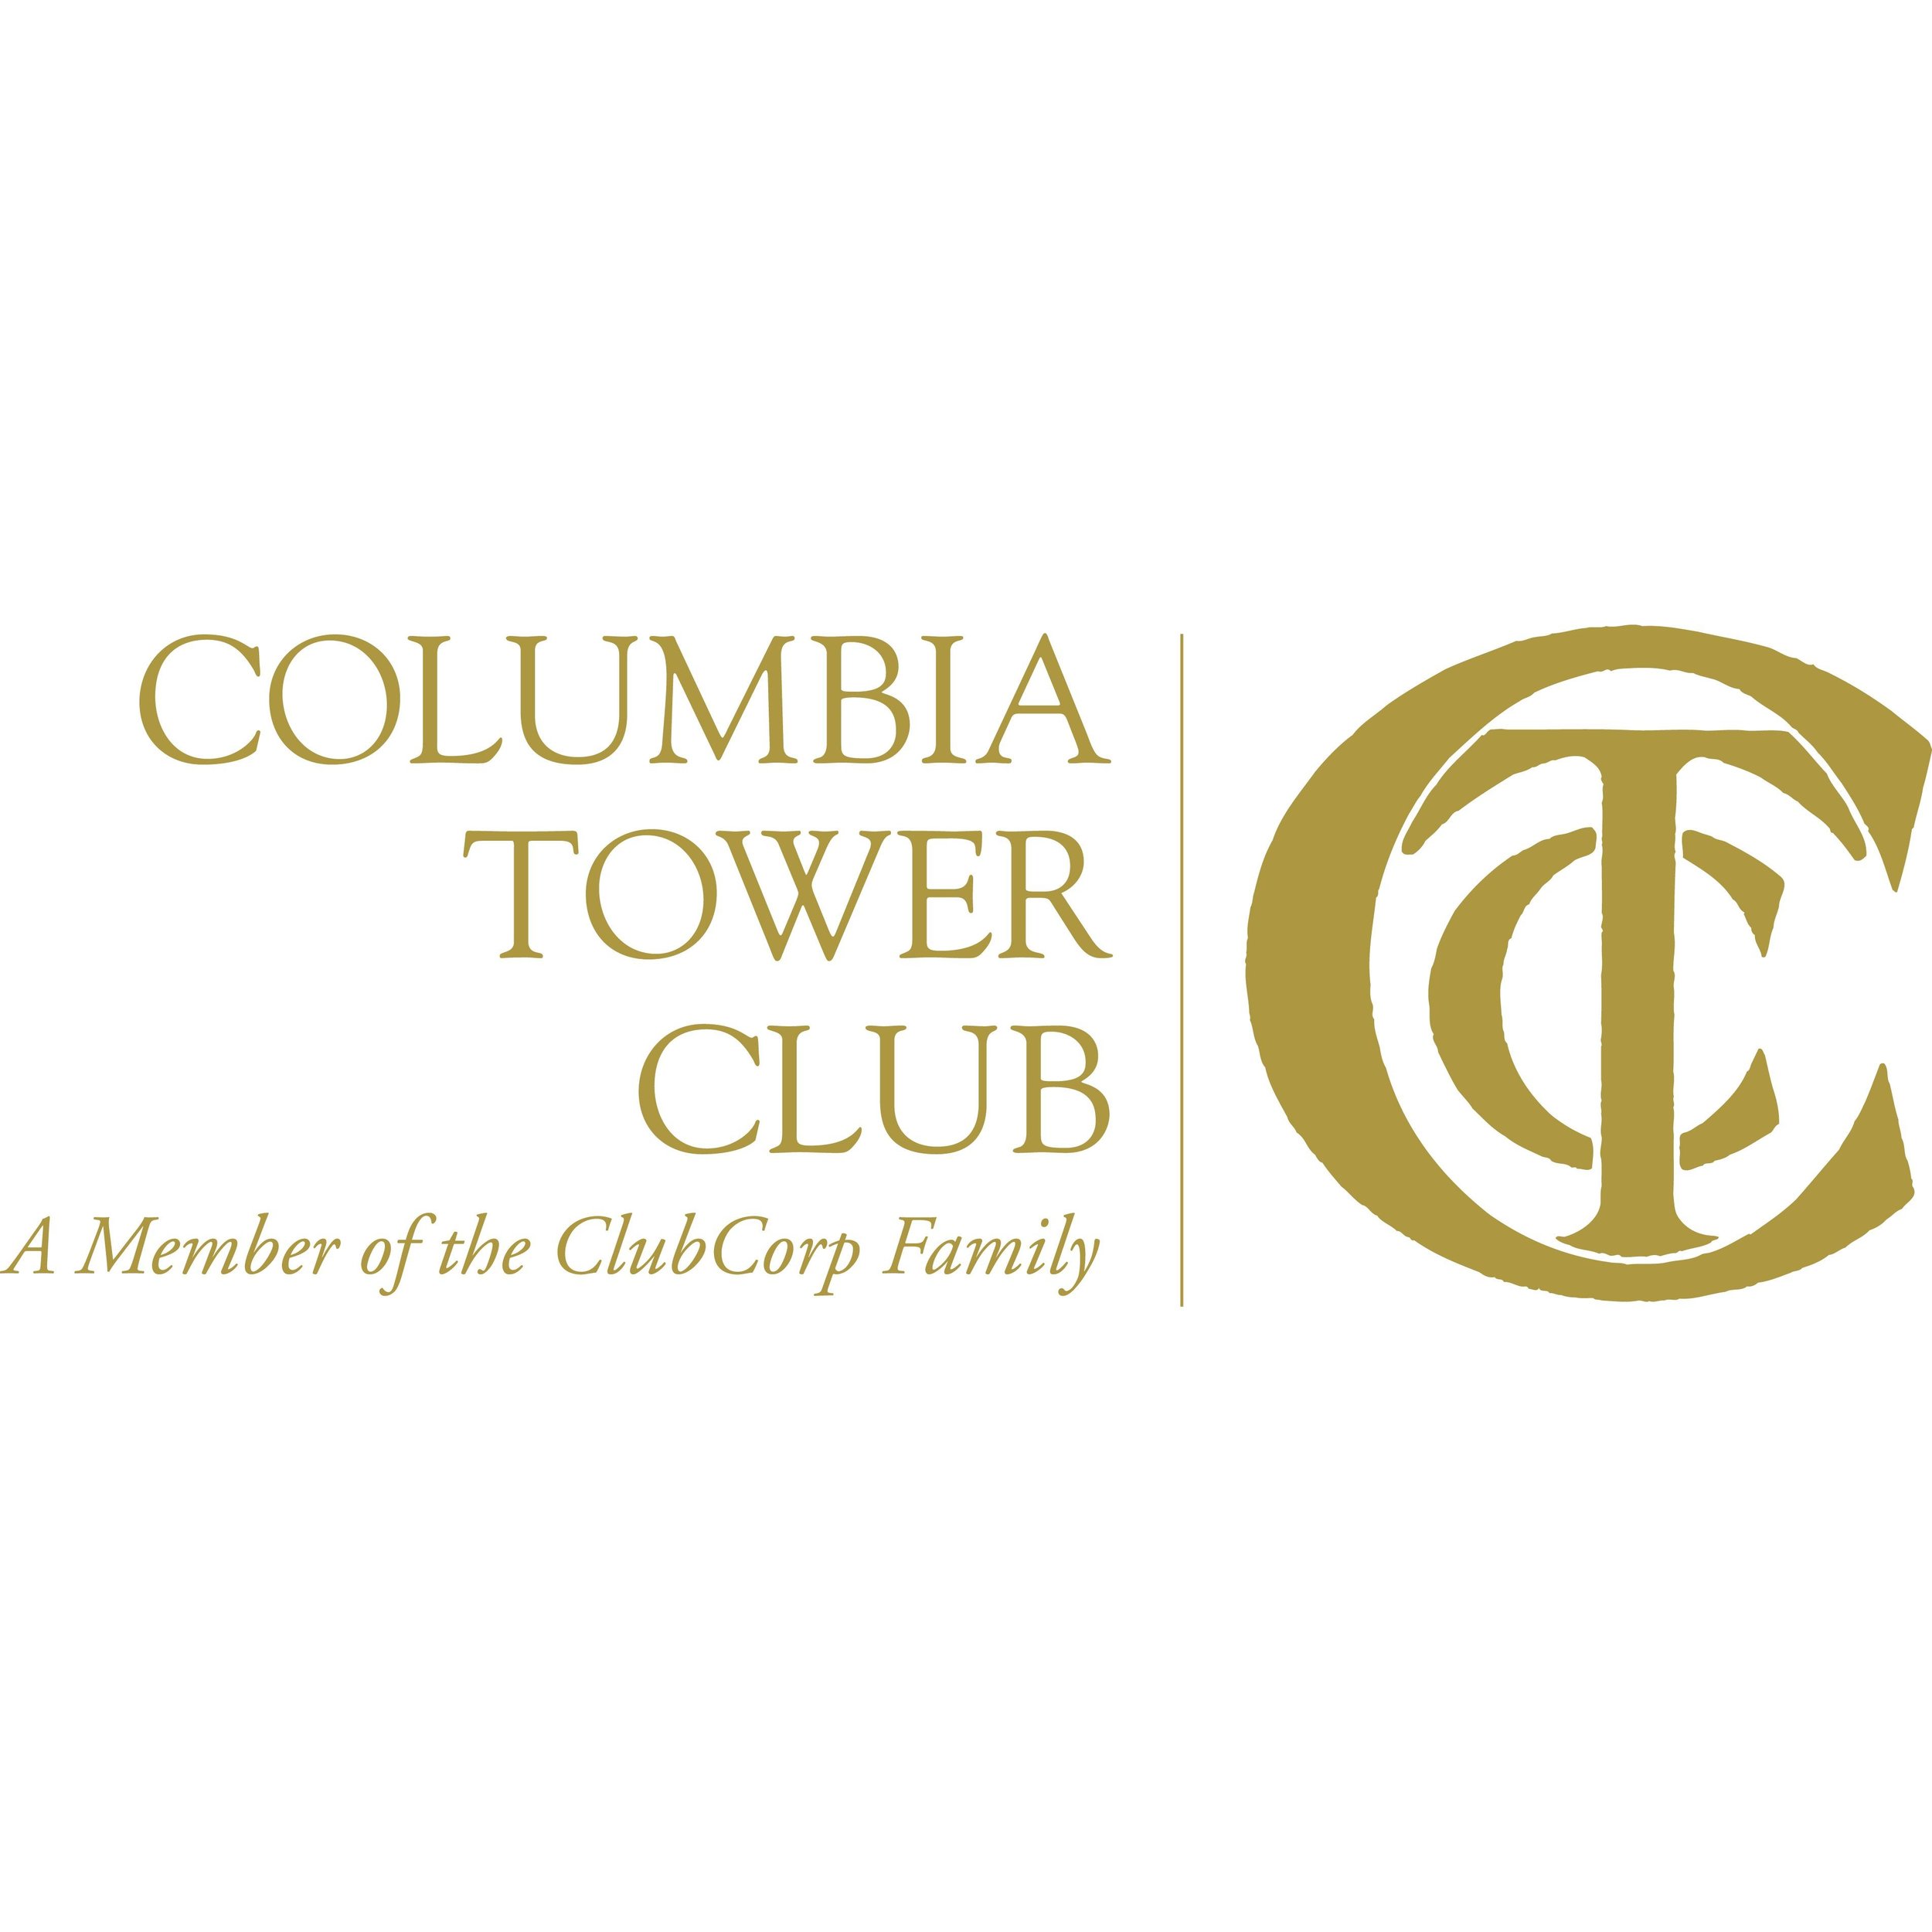 Columbia Tower Club logo.jpg